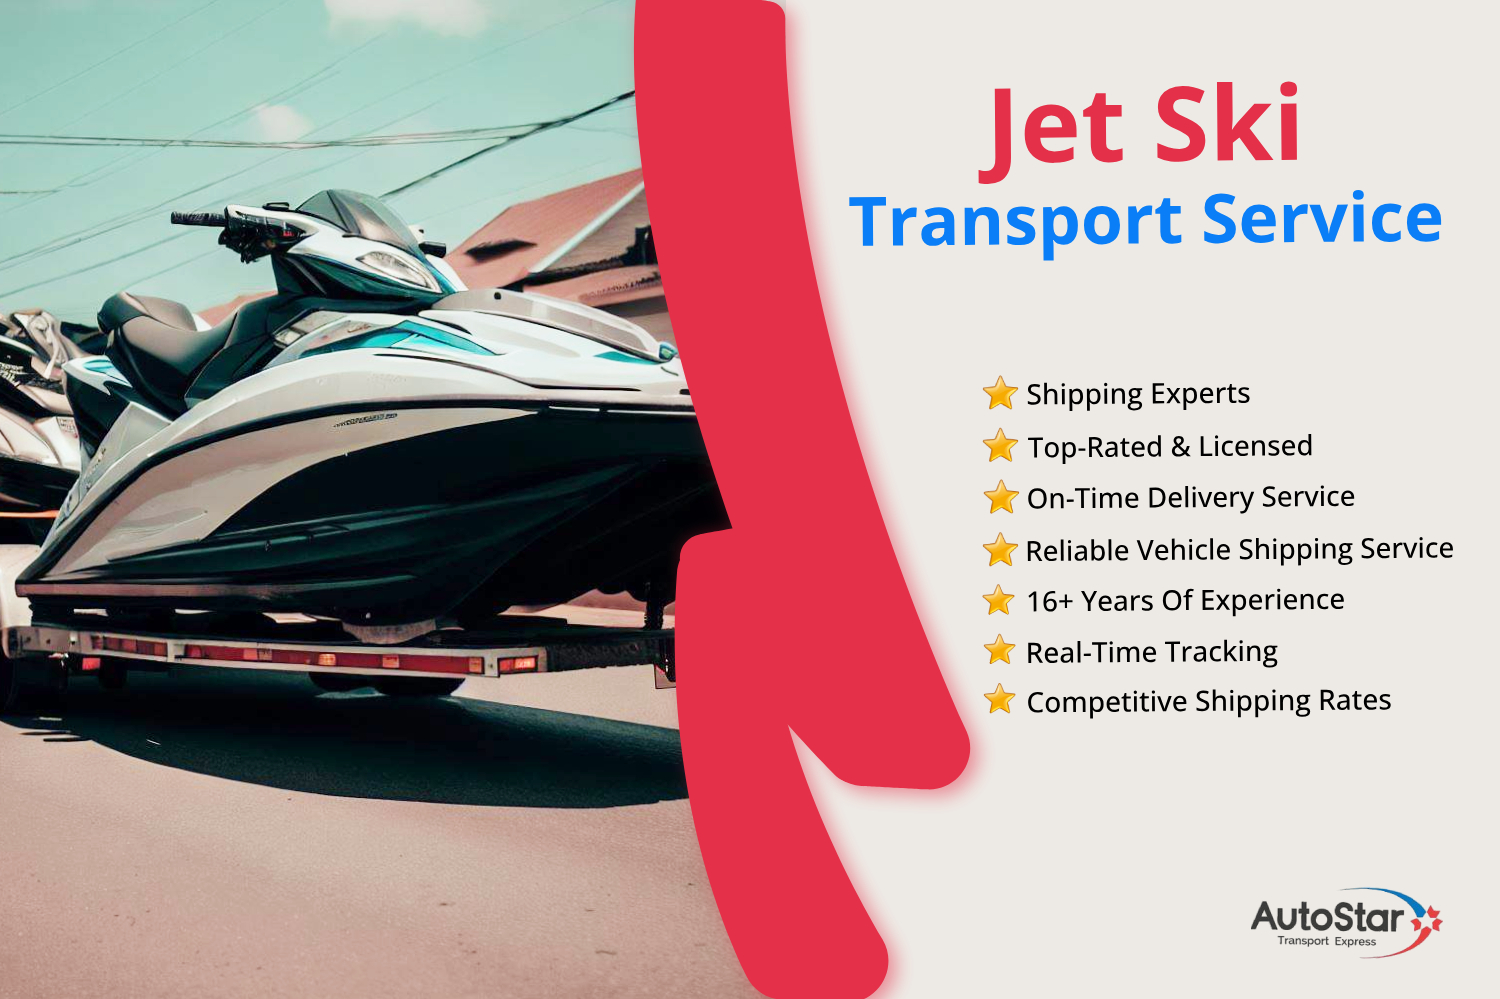 Jet ski transport services